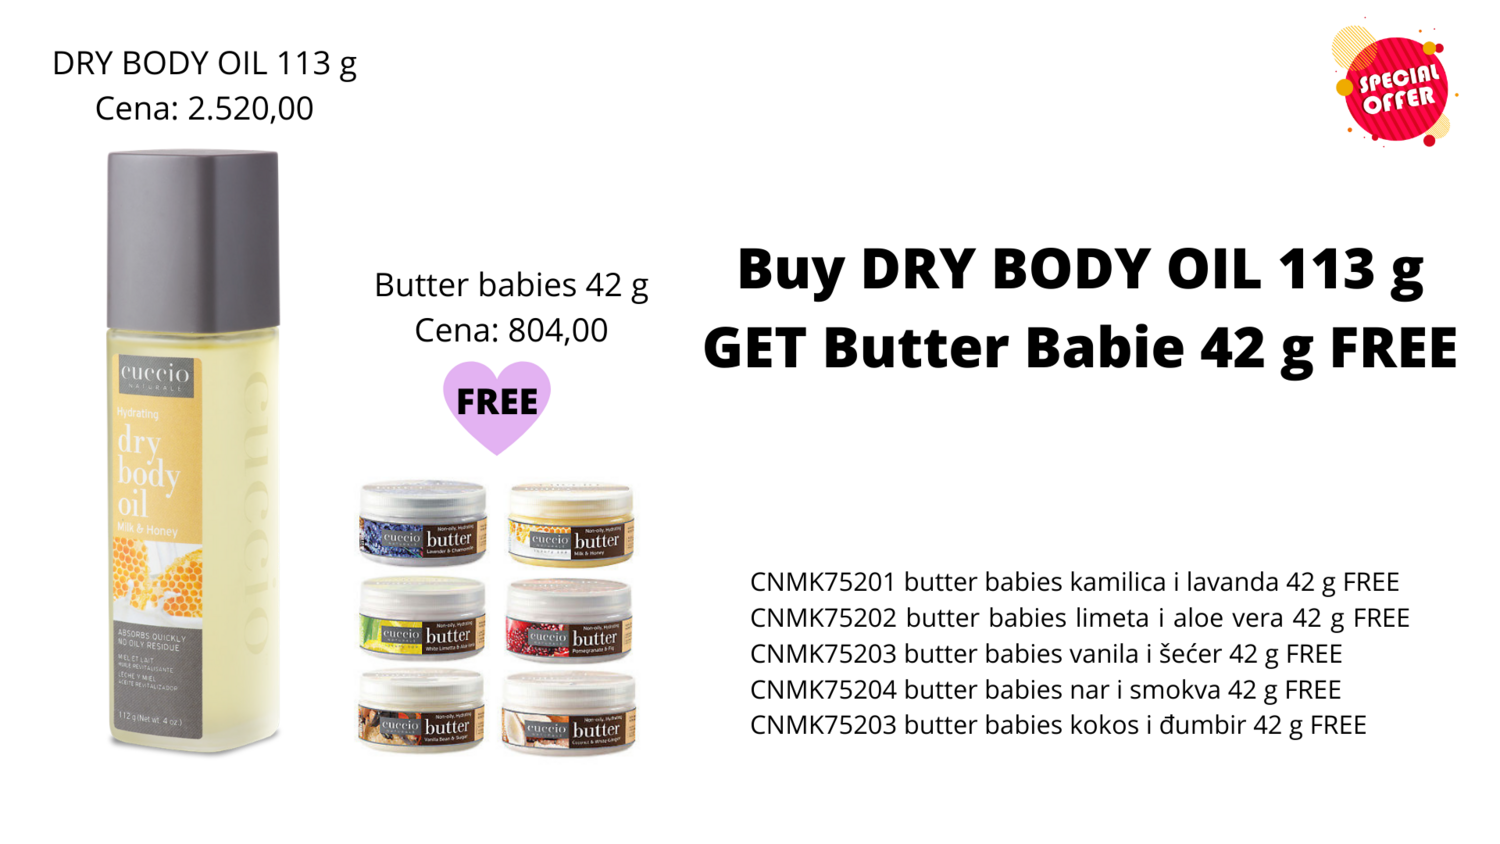 BUY Body Dry oil 113 g GET Butter Babies 42 g